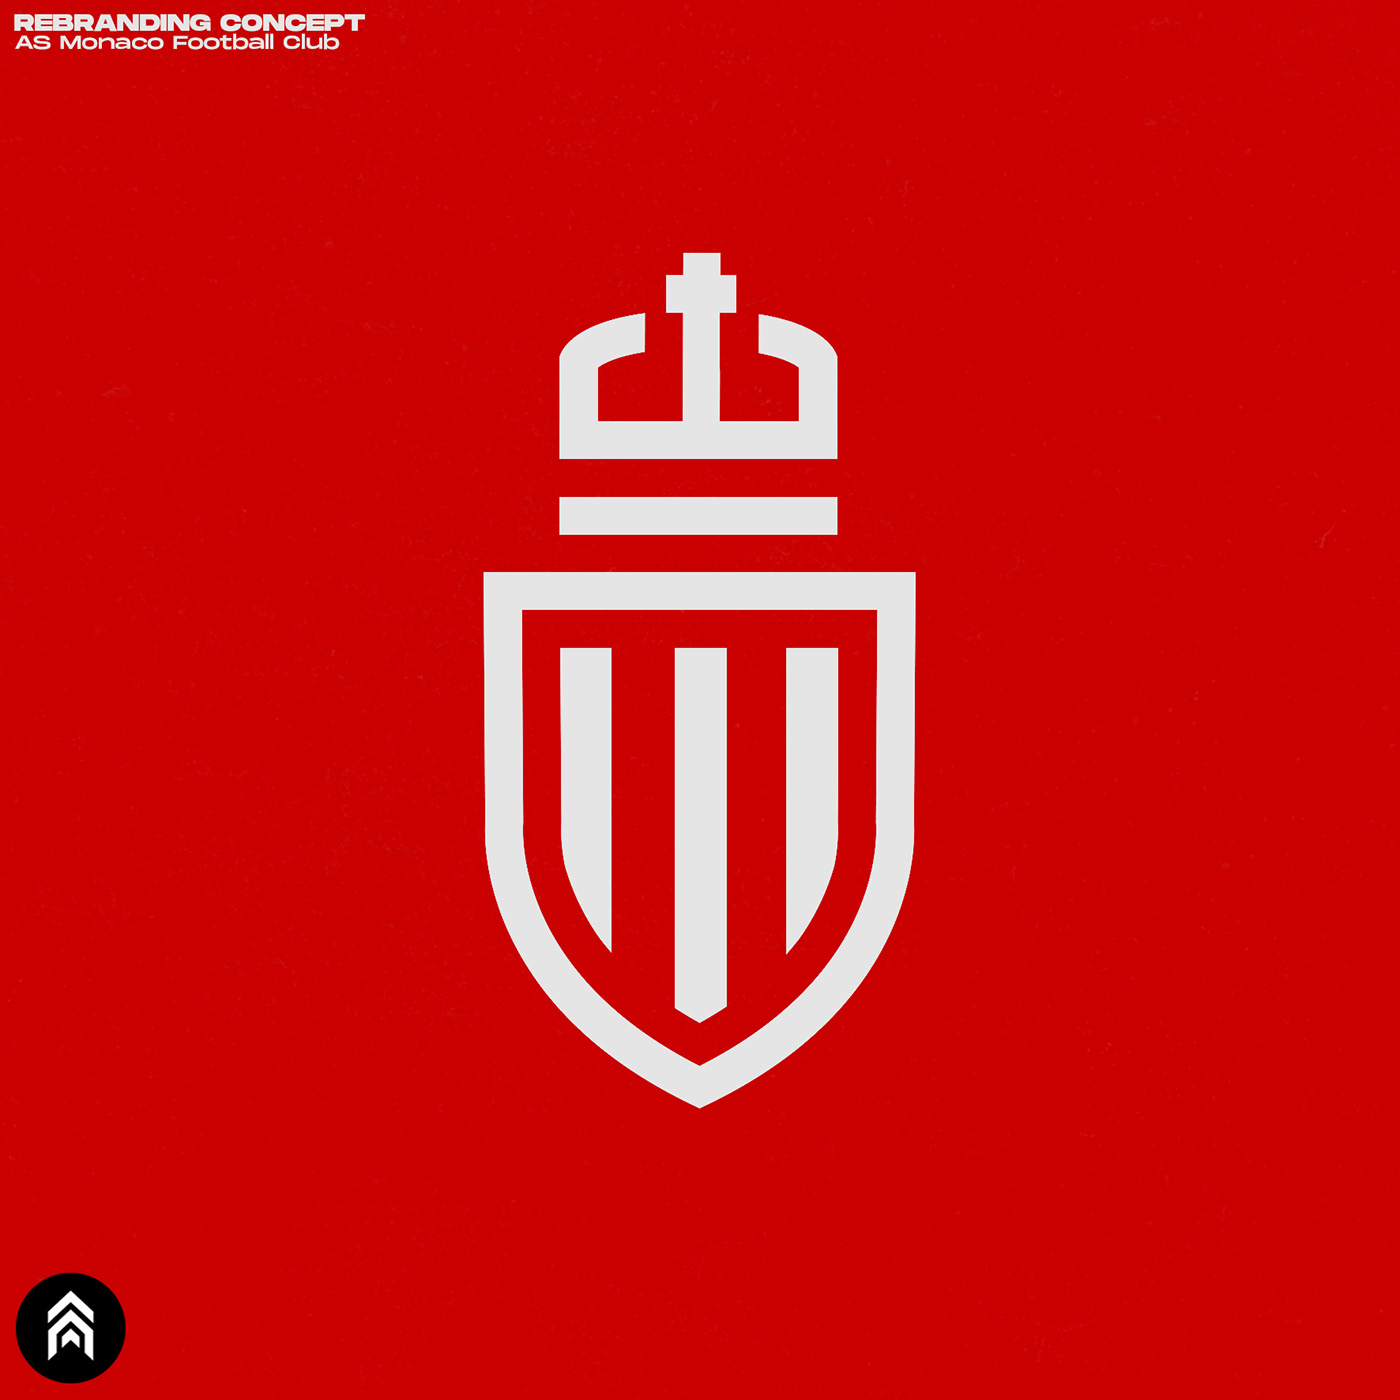 diseño equipo escudo Futbol minimalismo Monaco rebranding